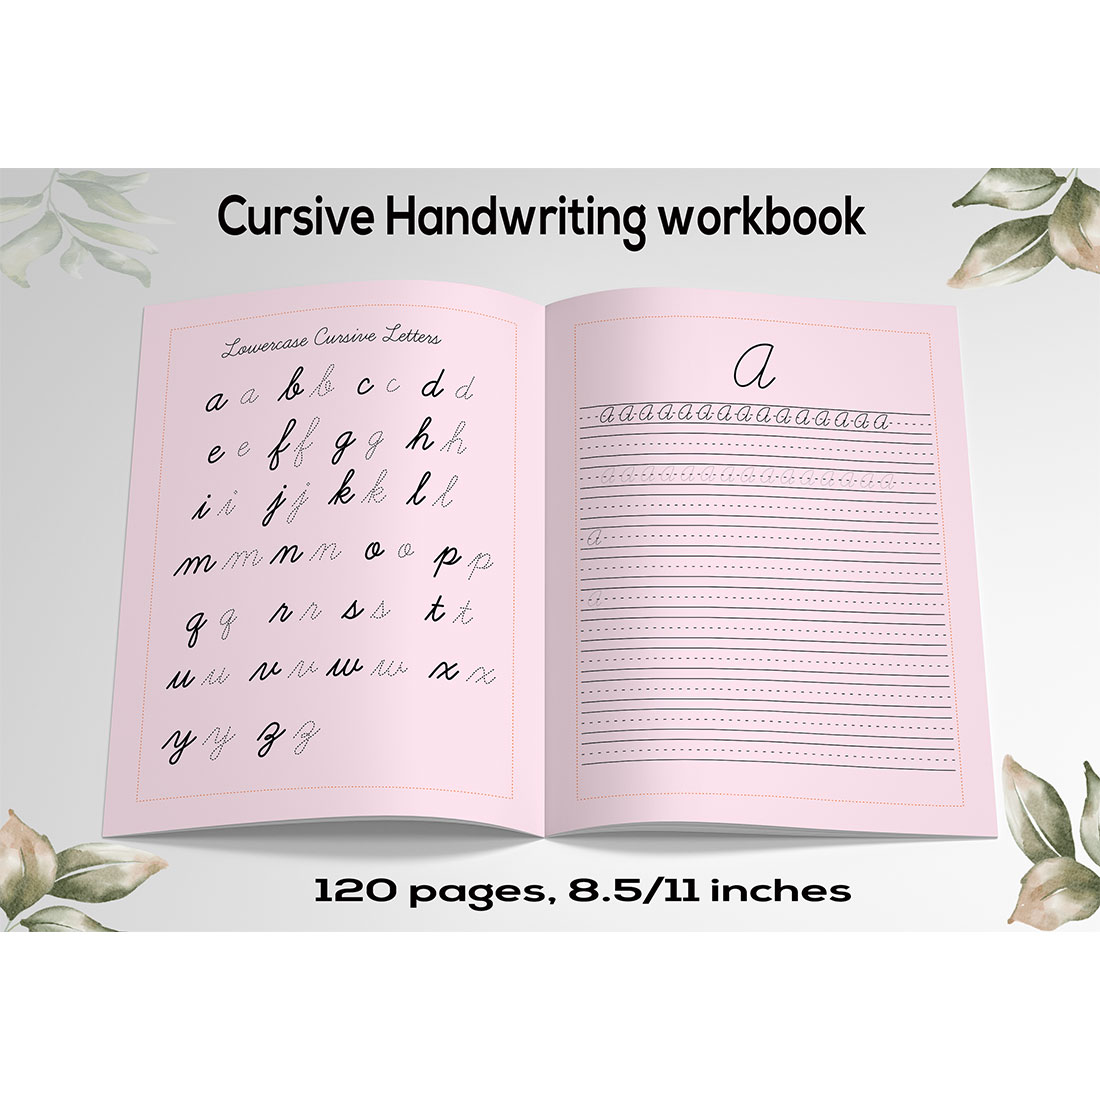 Cursive Handwriting workbook preview image.